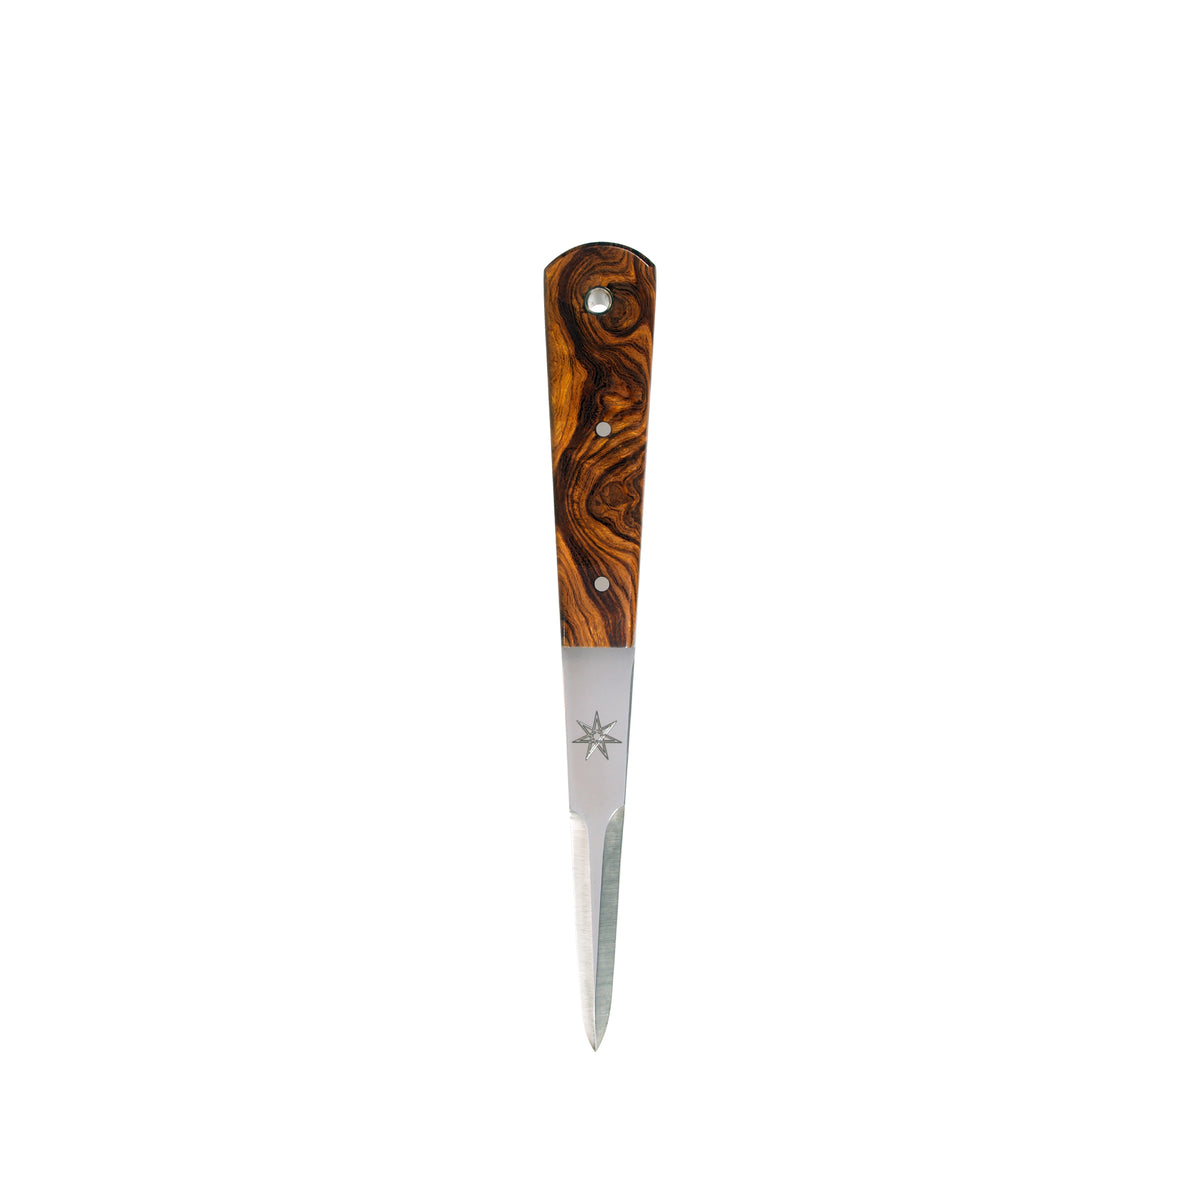 Stainless steel oyster shucker knife by Town Cutler featuring Olneya Desert Ironwood handle.